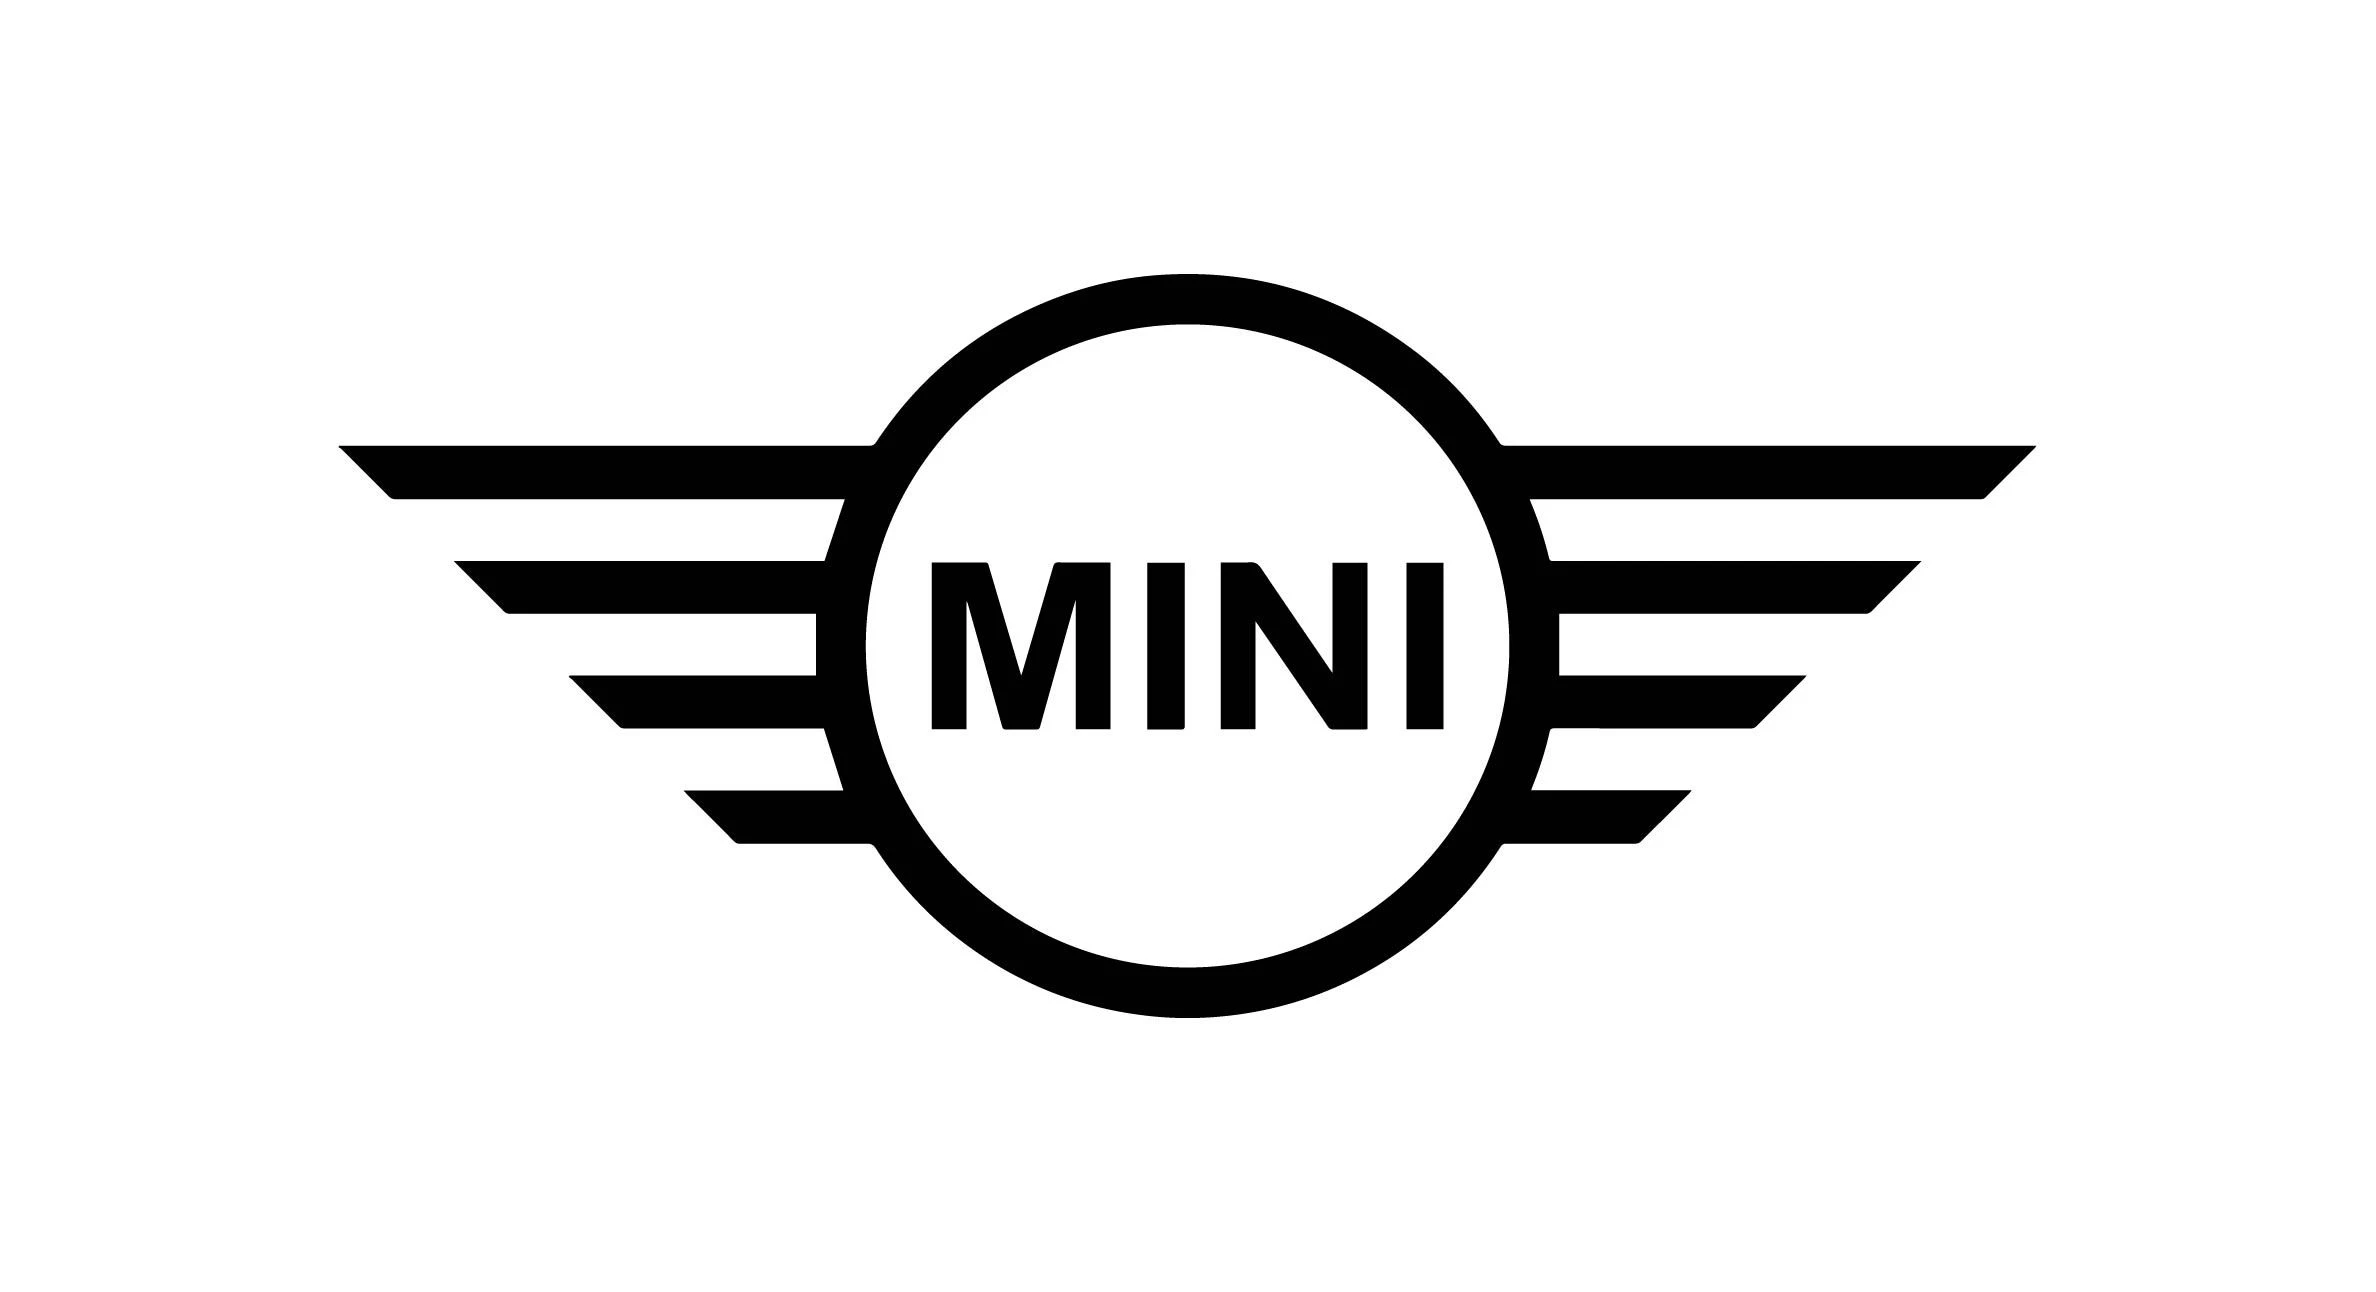 Mini car brand logo